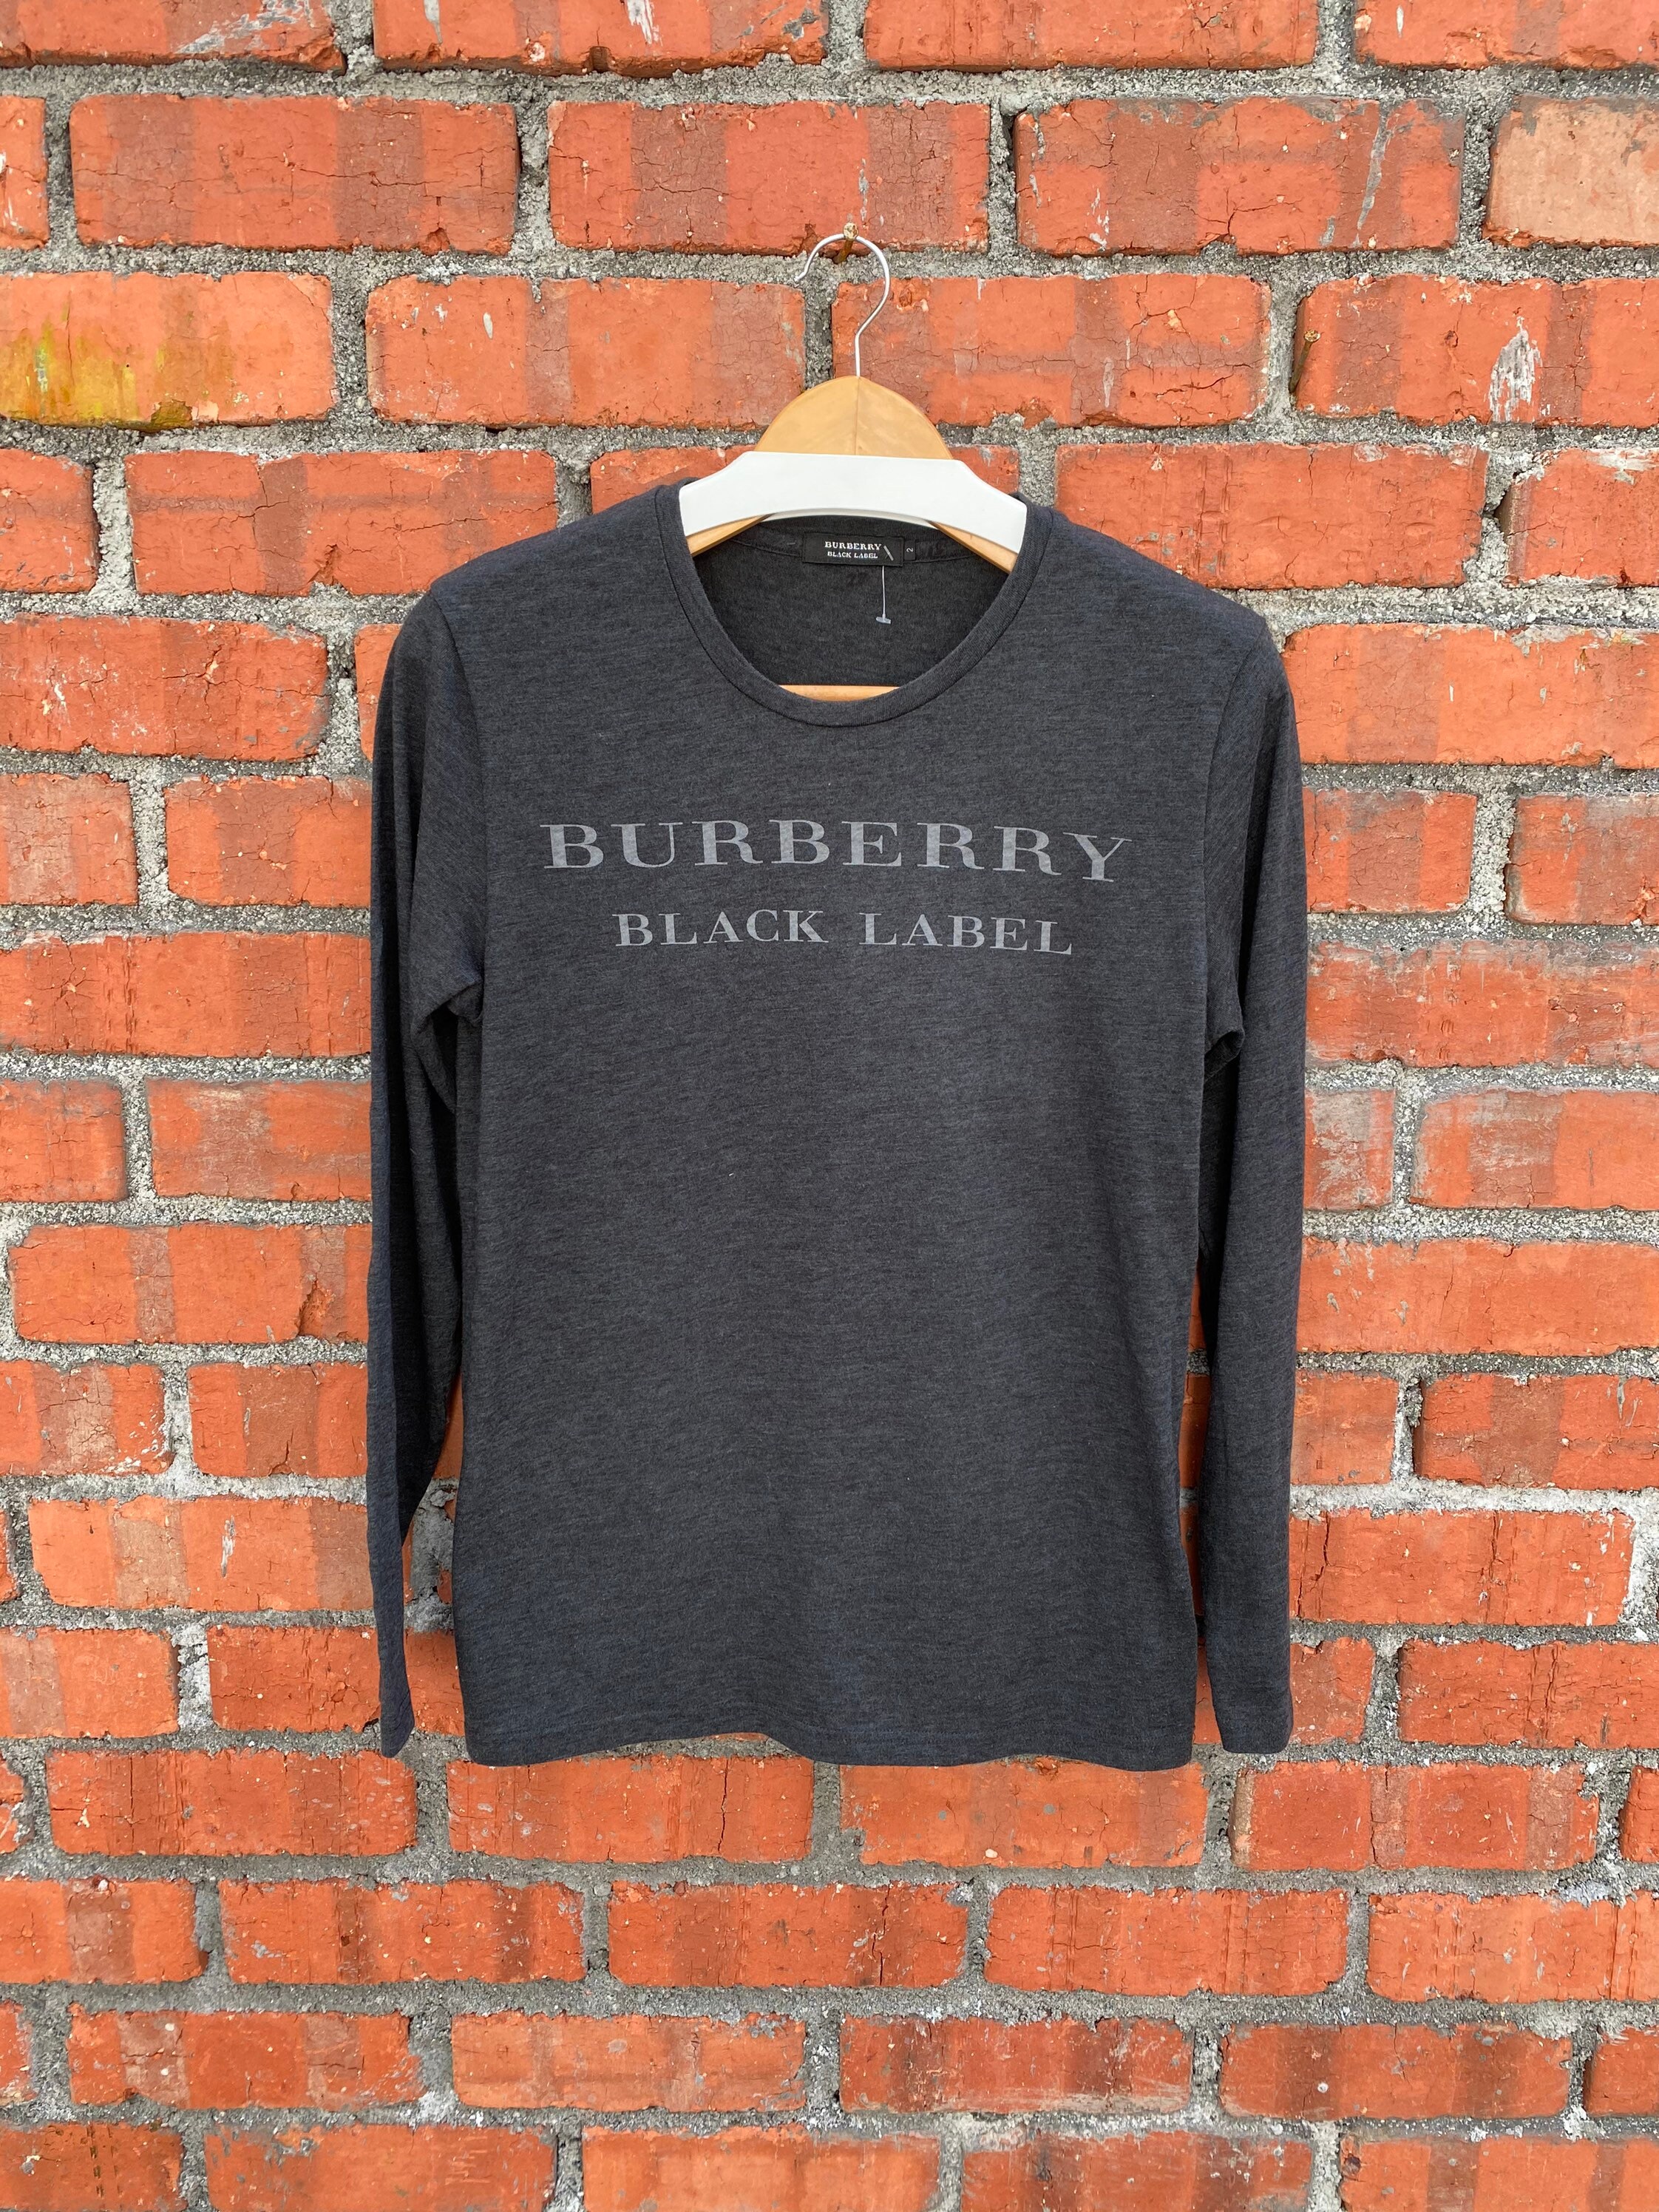 Burberry Black Label - Etsy